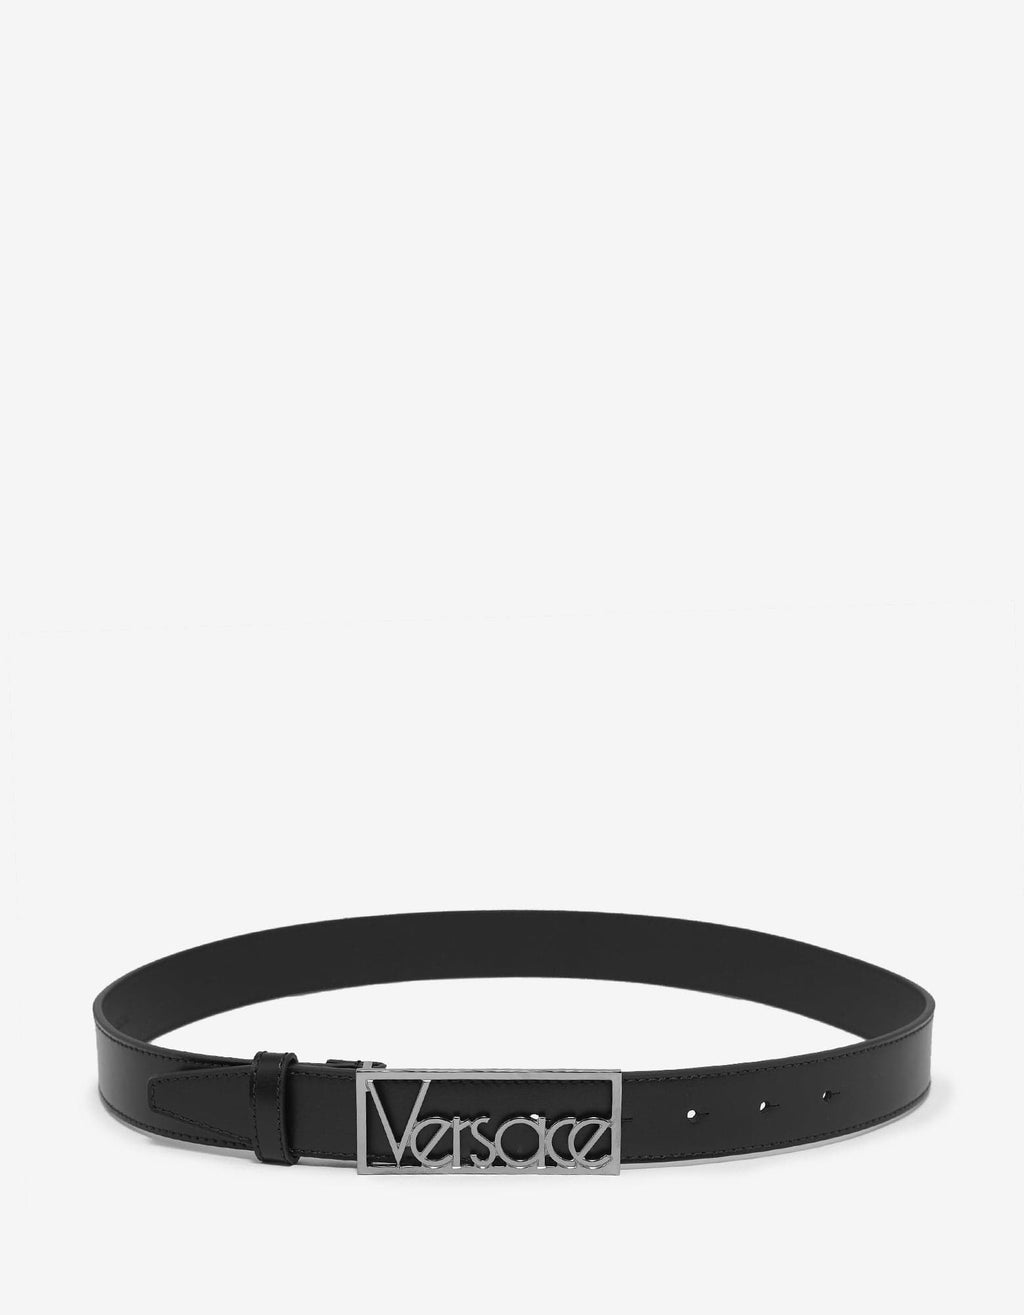 Versace Black Leather Belt with Silver Vintage Logo Buckle